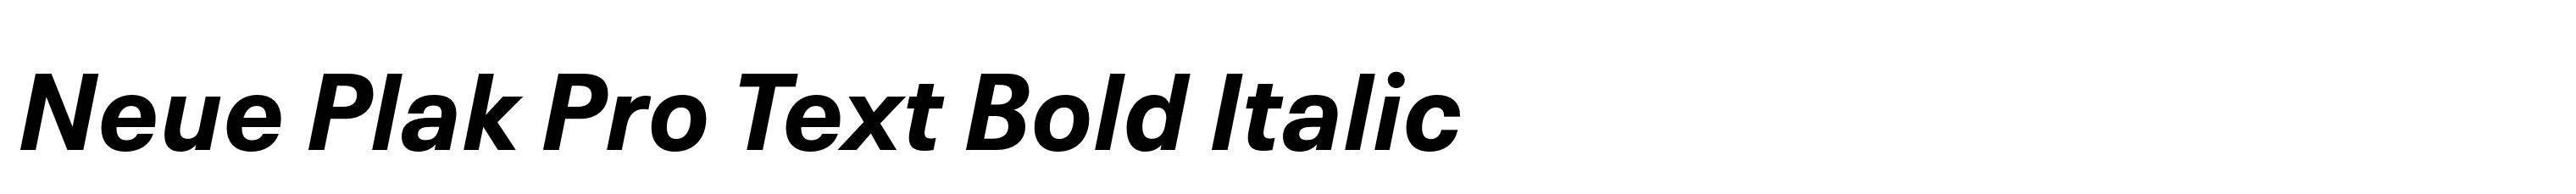 Neue Plak Pro Text Bold Italic